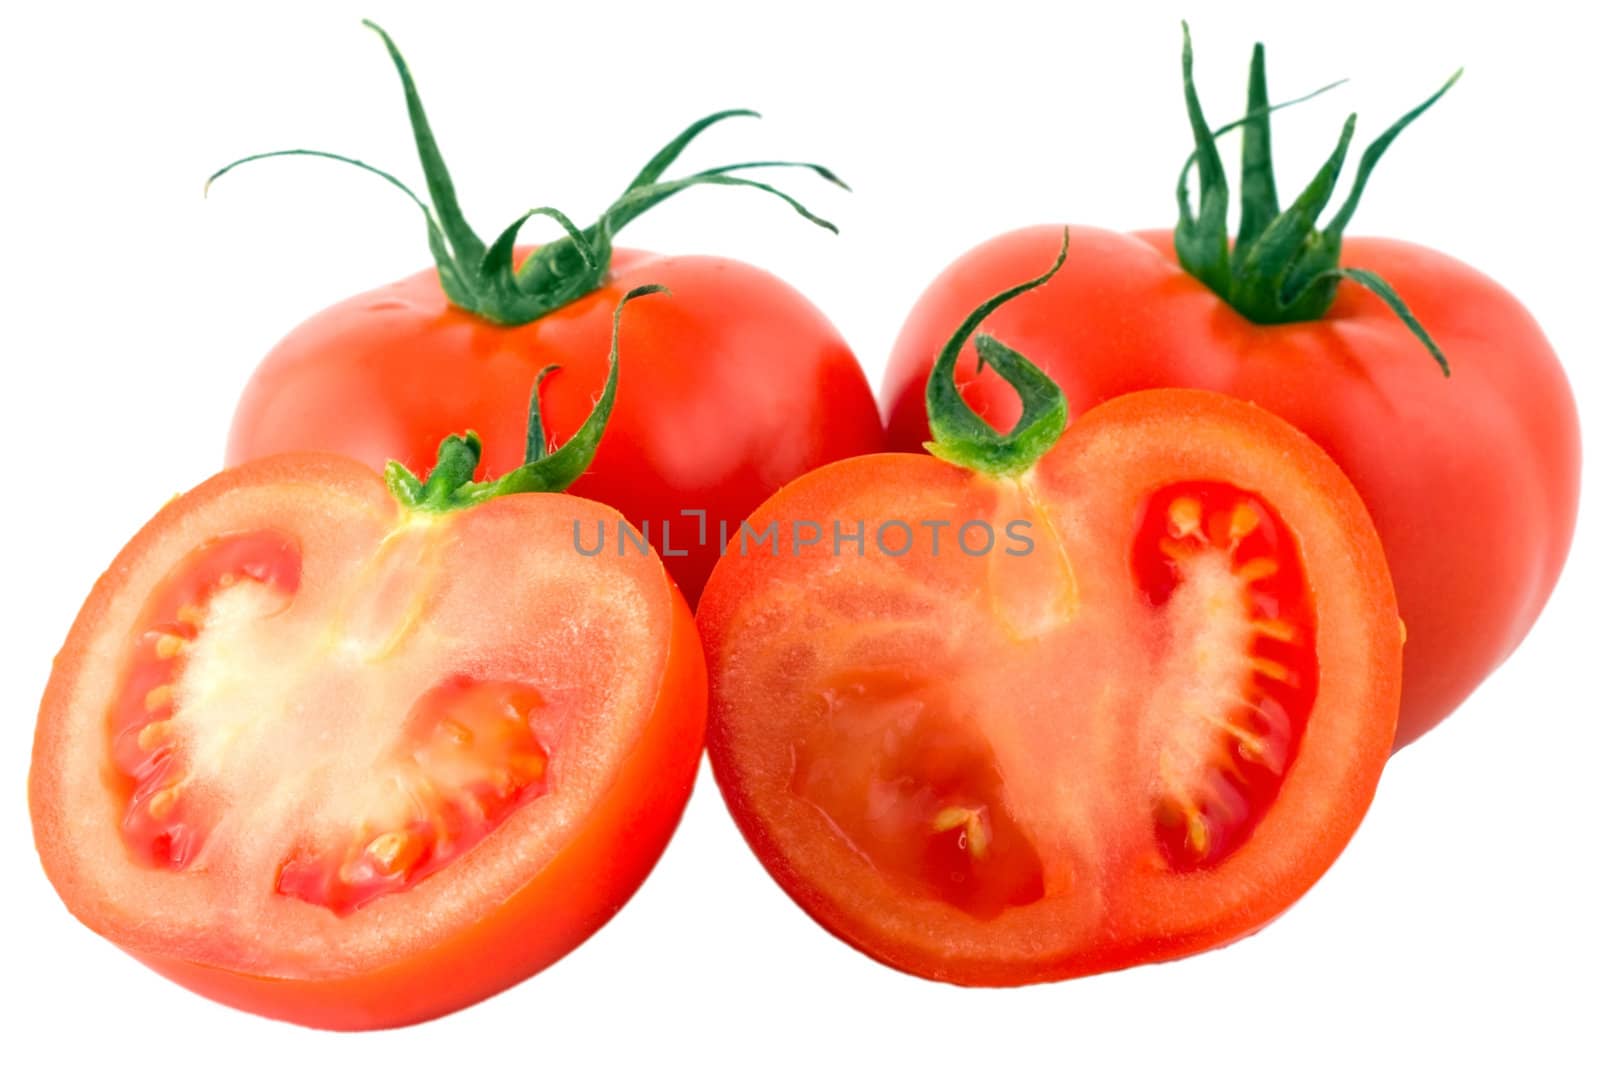 tomatoes isolated on white background.